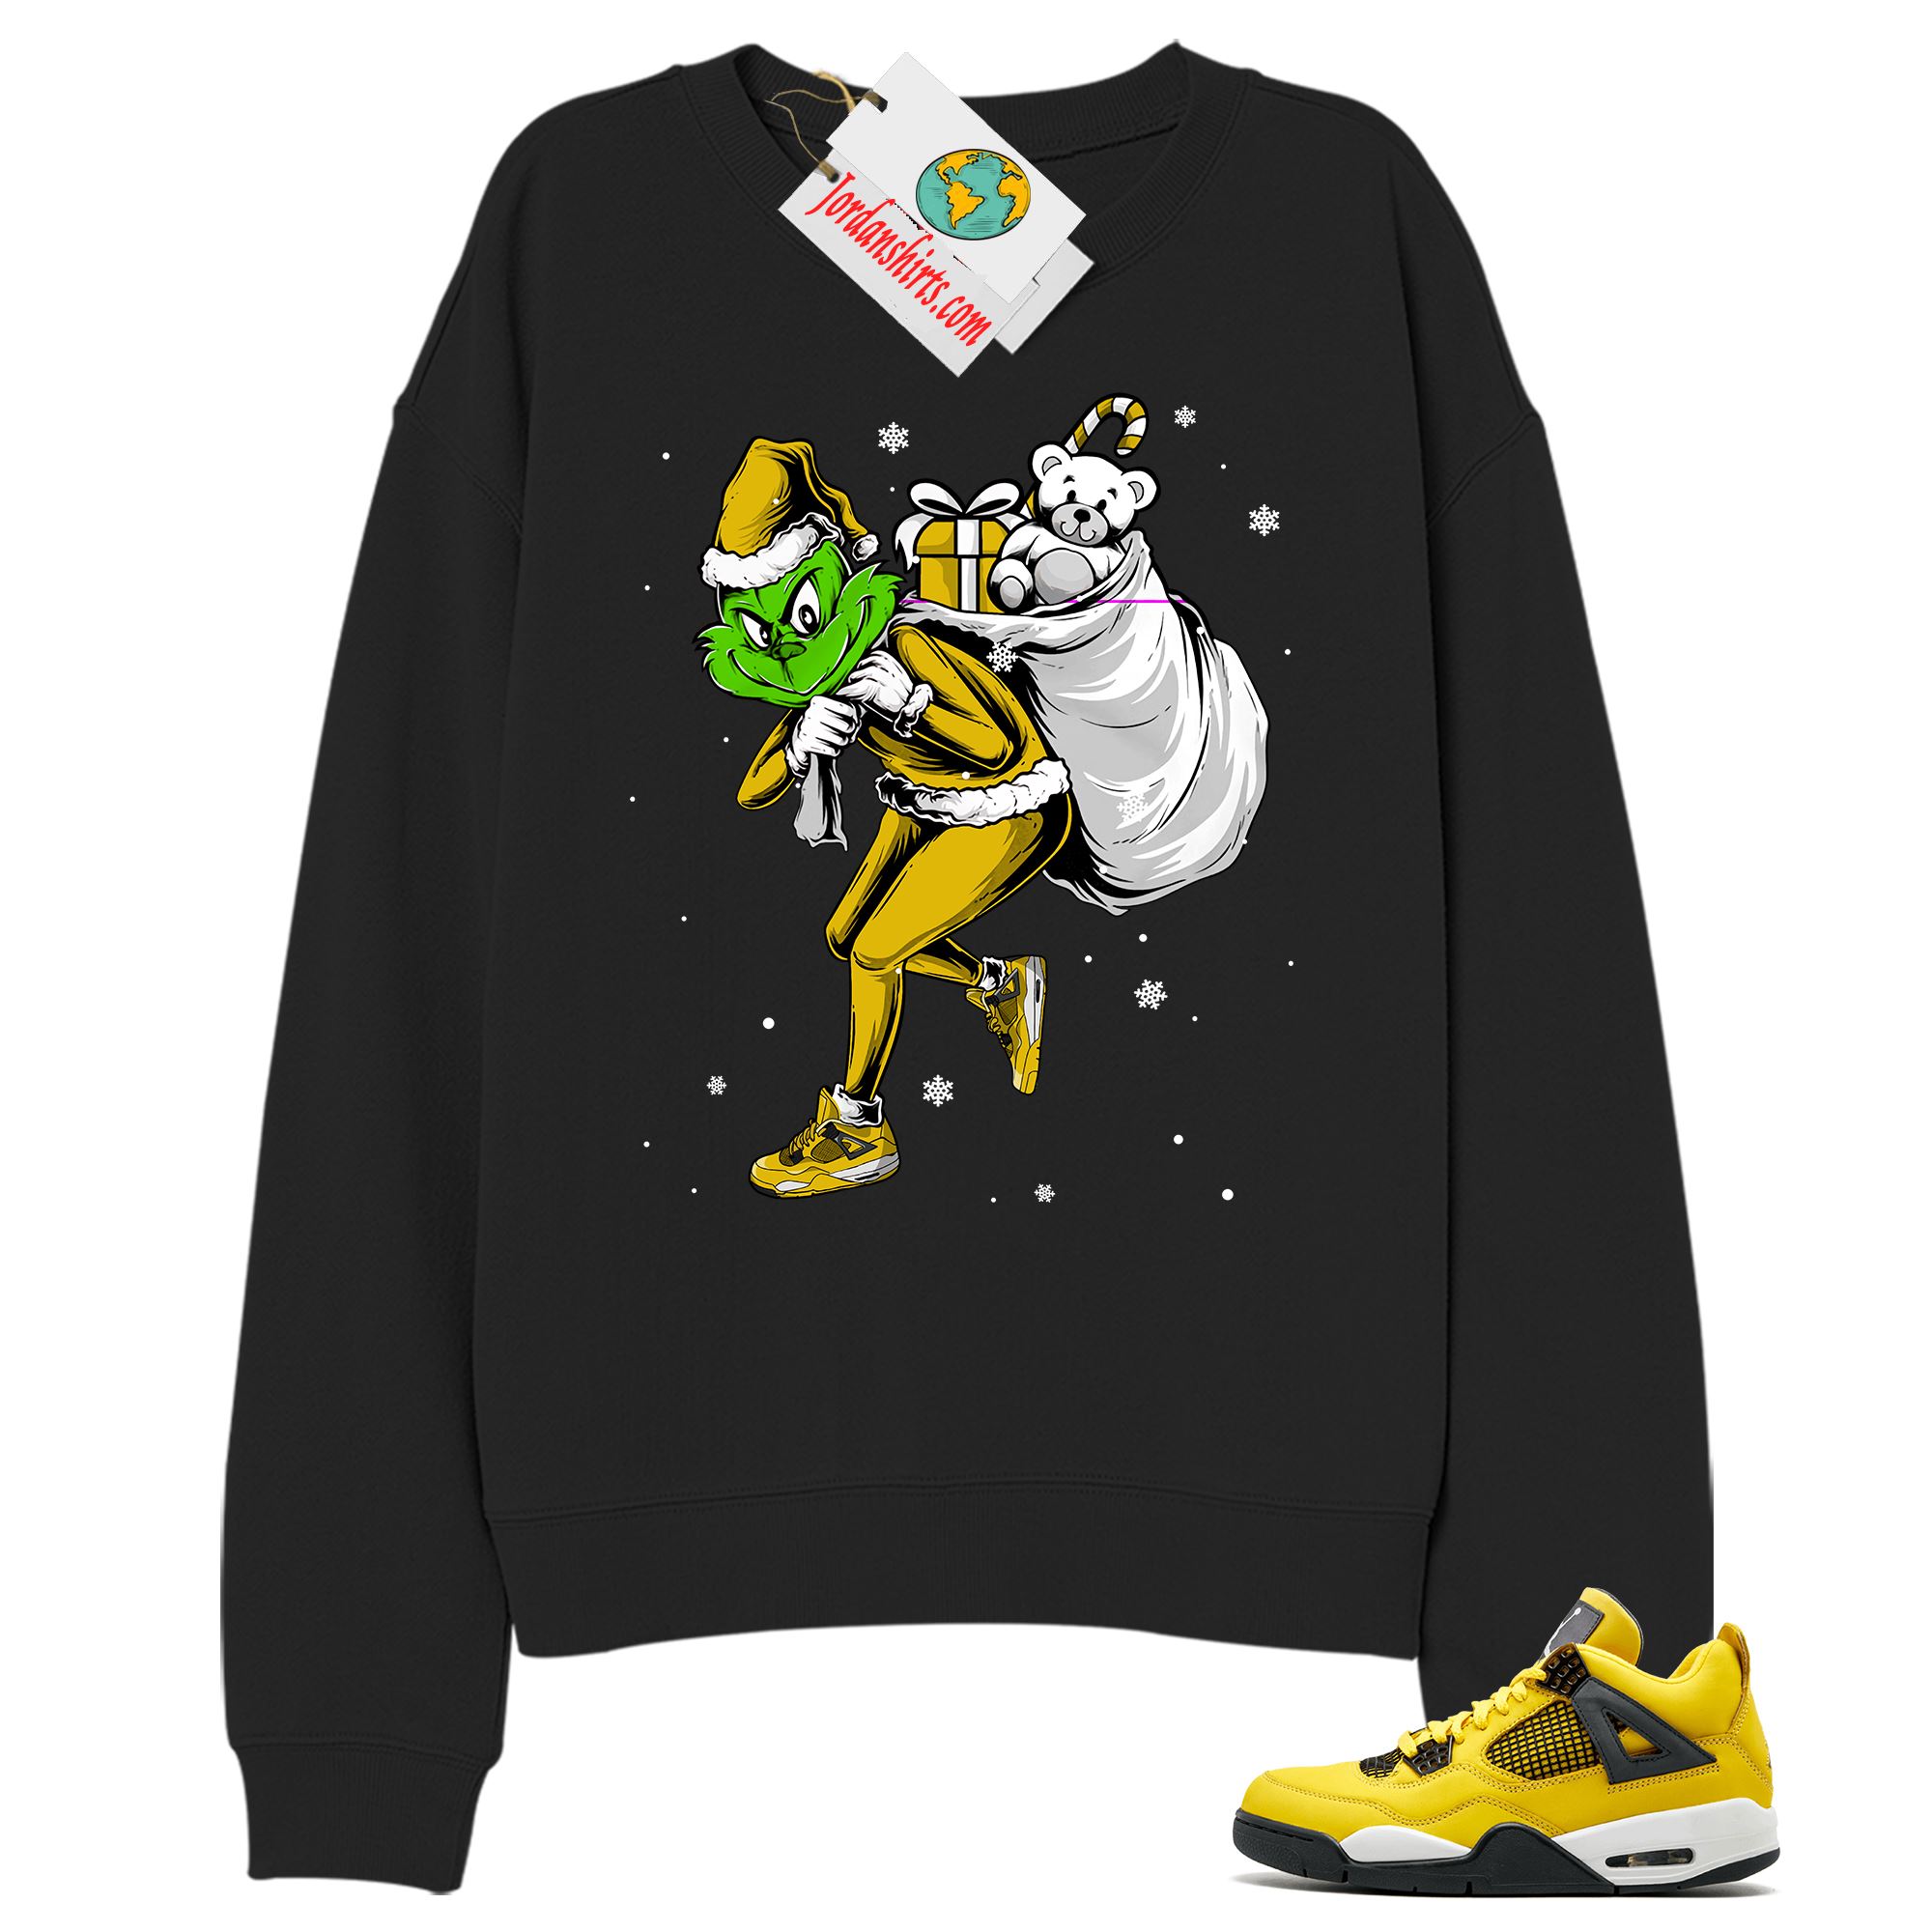 Jordan 4 Sweatshirt, Rich Gorilla With Money Black Sweatshirt Air Jordan 4 Tour Yellow Lightning 4s-trungten-298po Full Size Up To 5xl